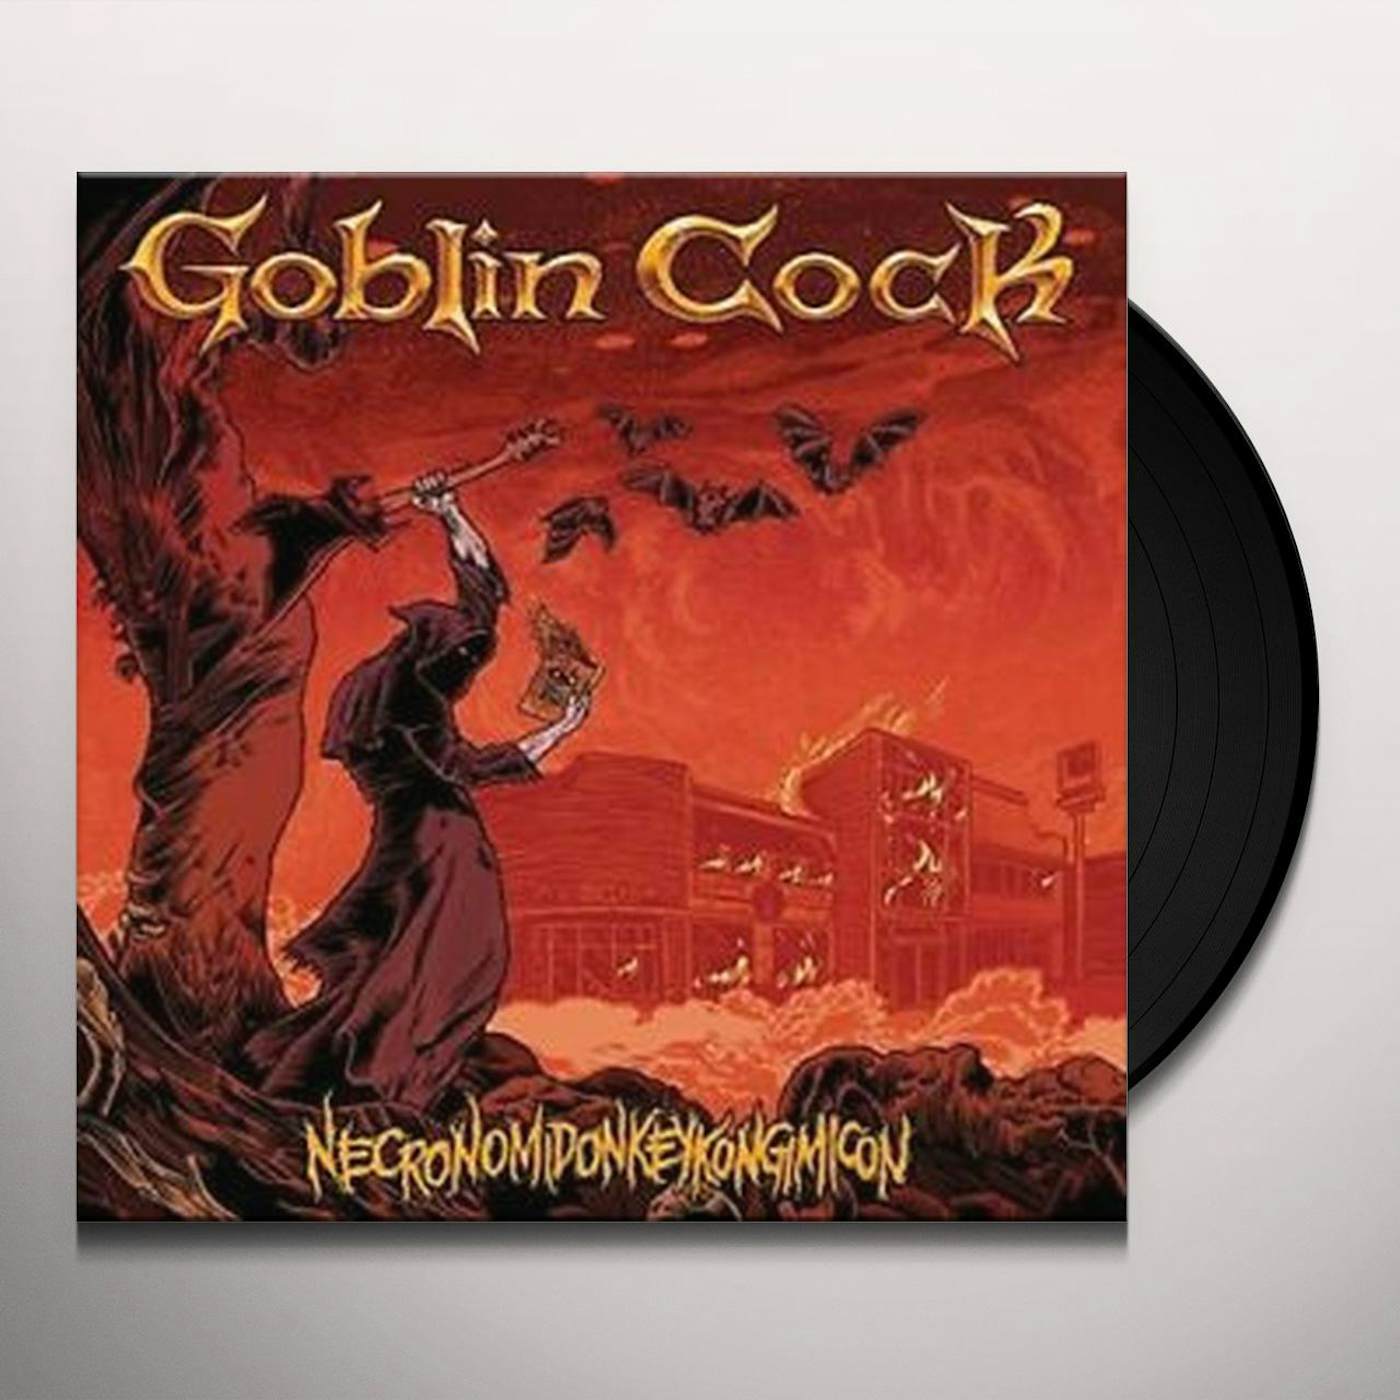 Goblin Cock NECRONOMIDONKEYKONGIMI Vinyl Record